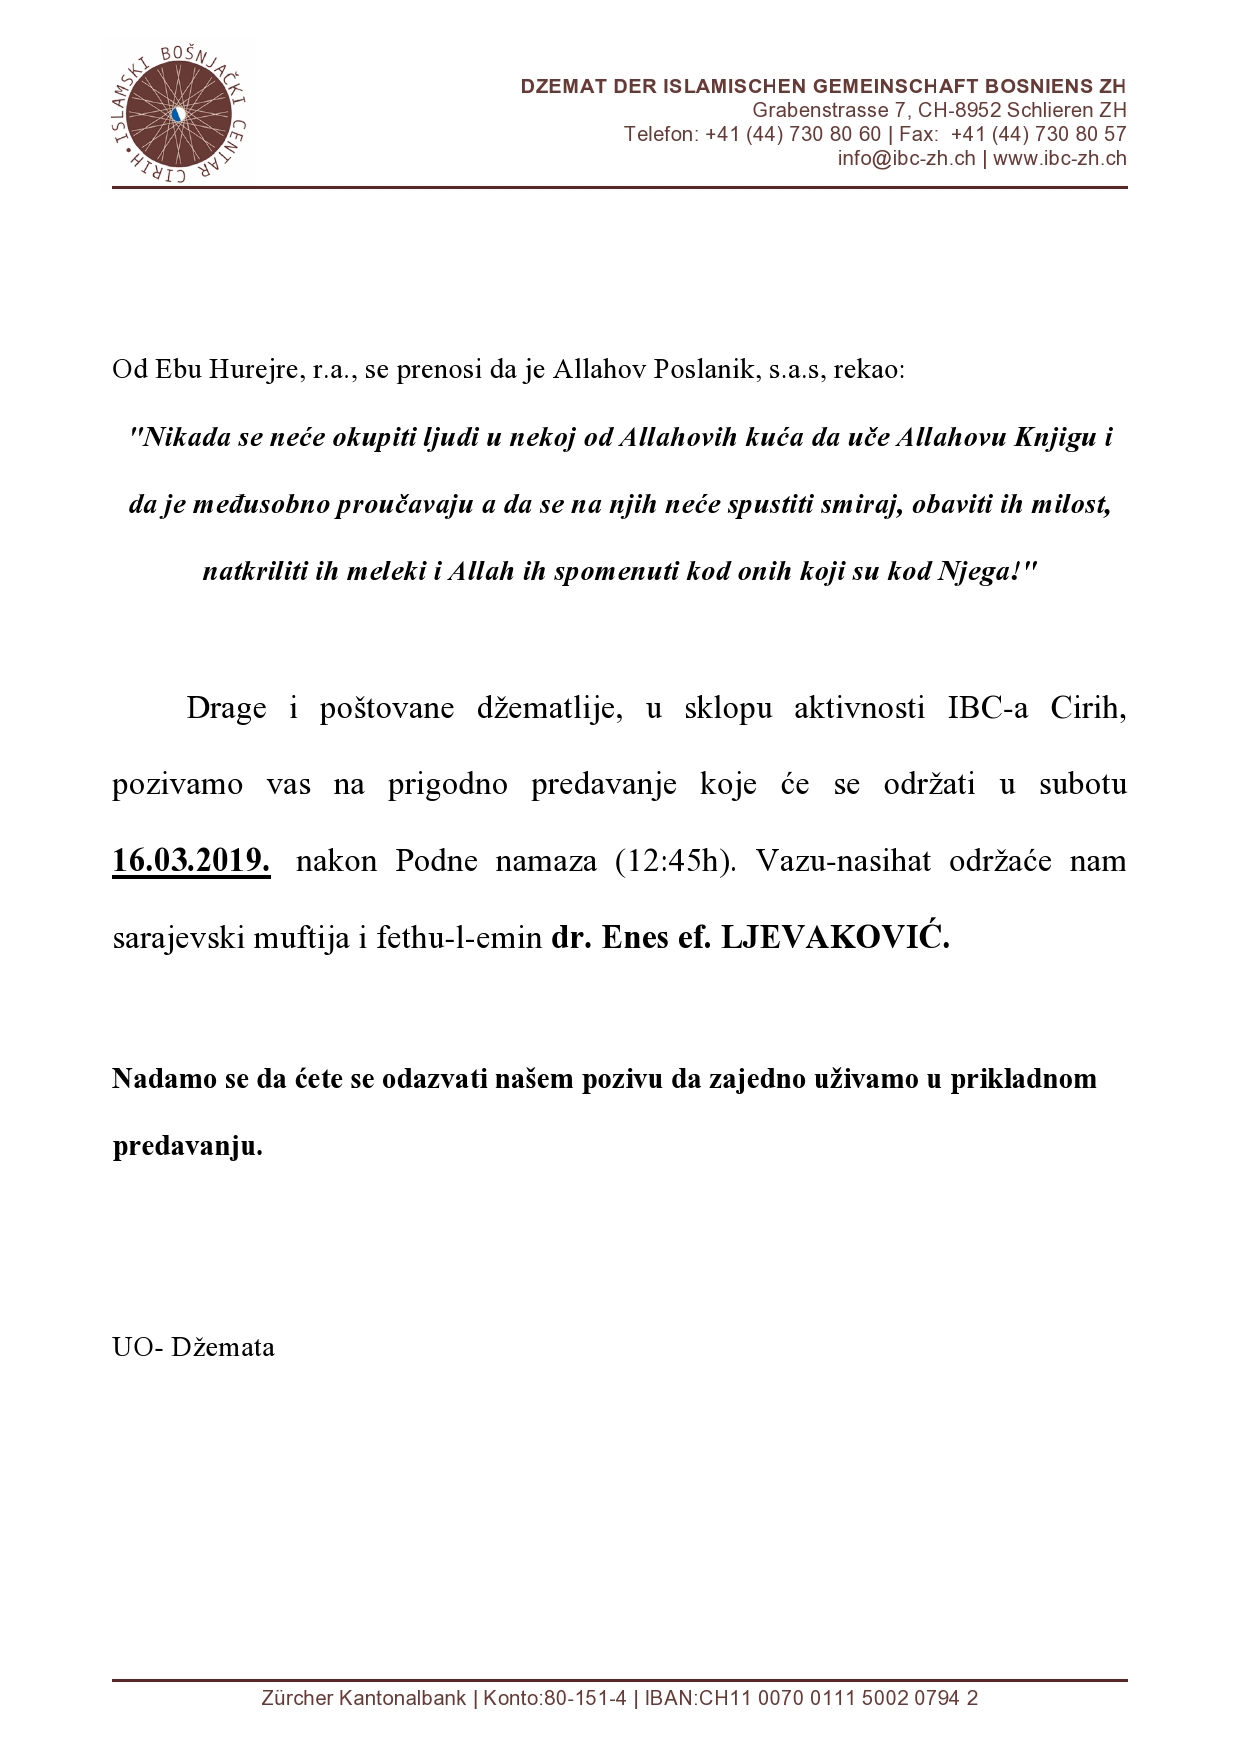 Ljevakovic 16.03.2019. page0001